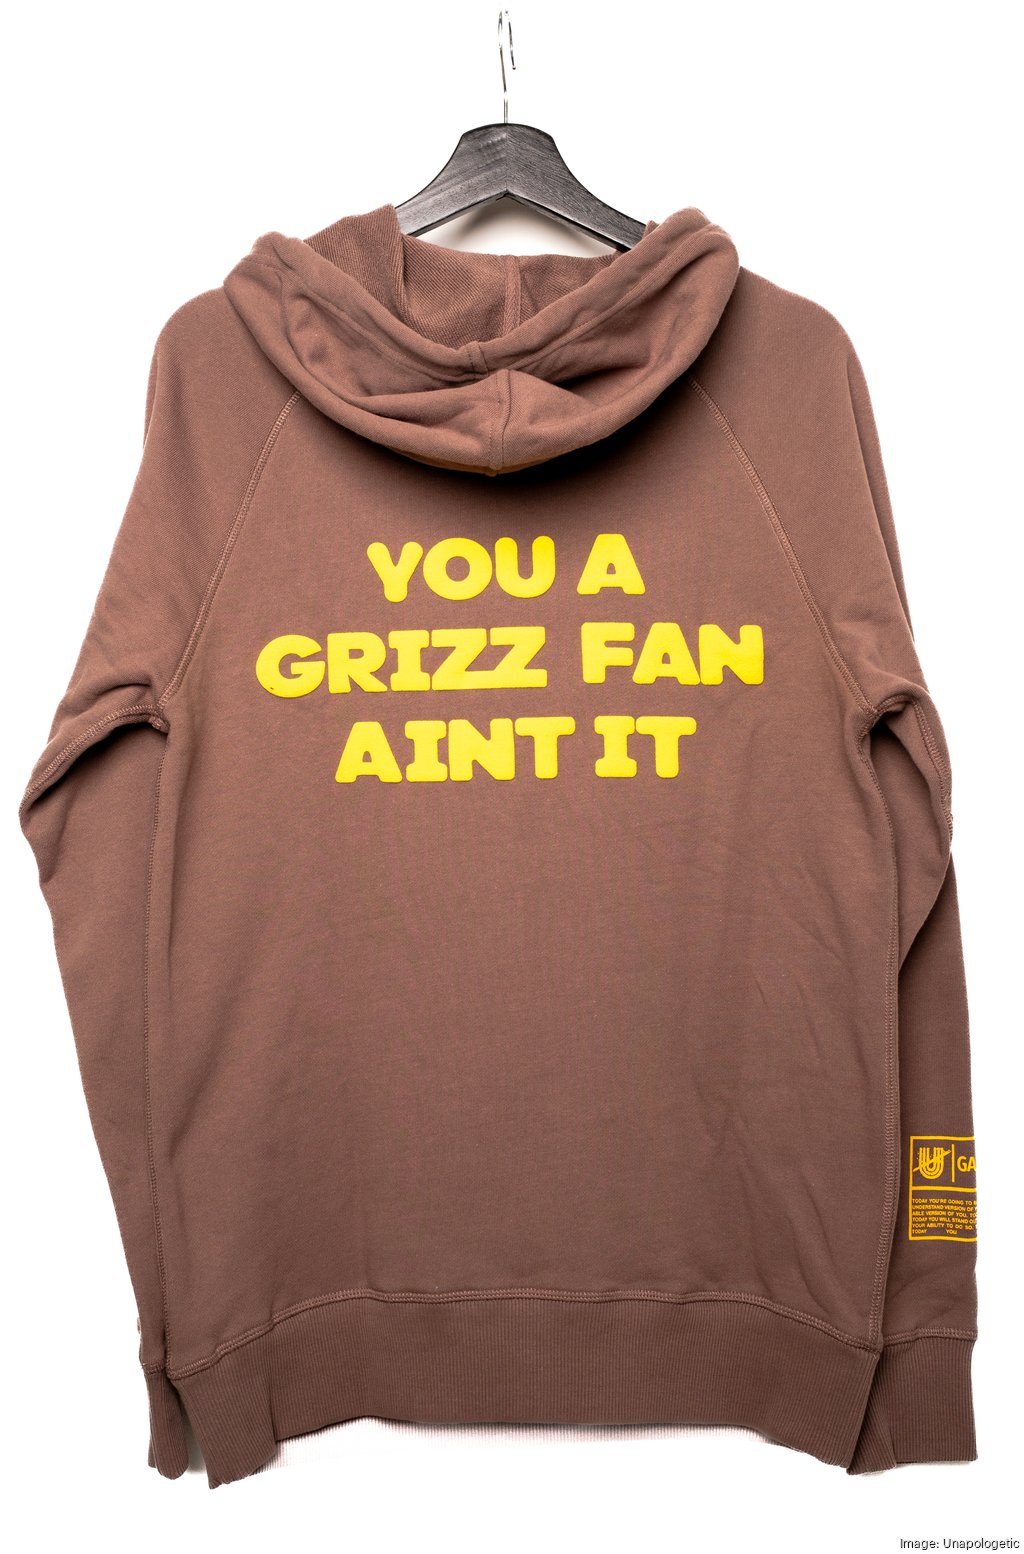 Bring out the tech suits, hoodies & - Memphis Grizzlies